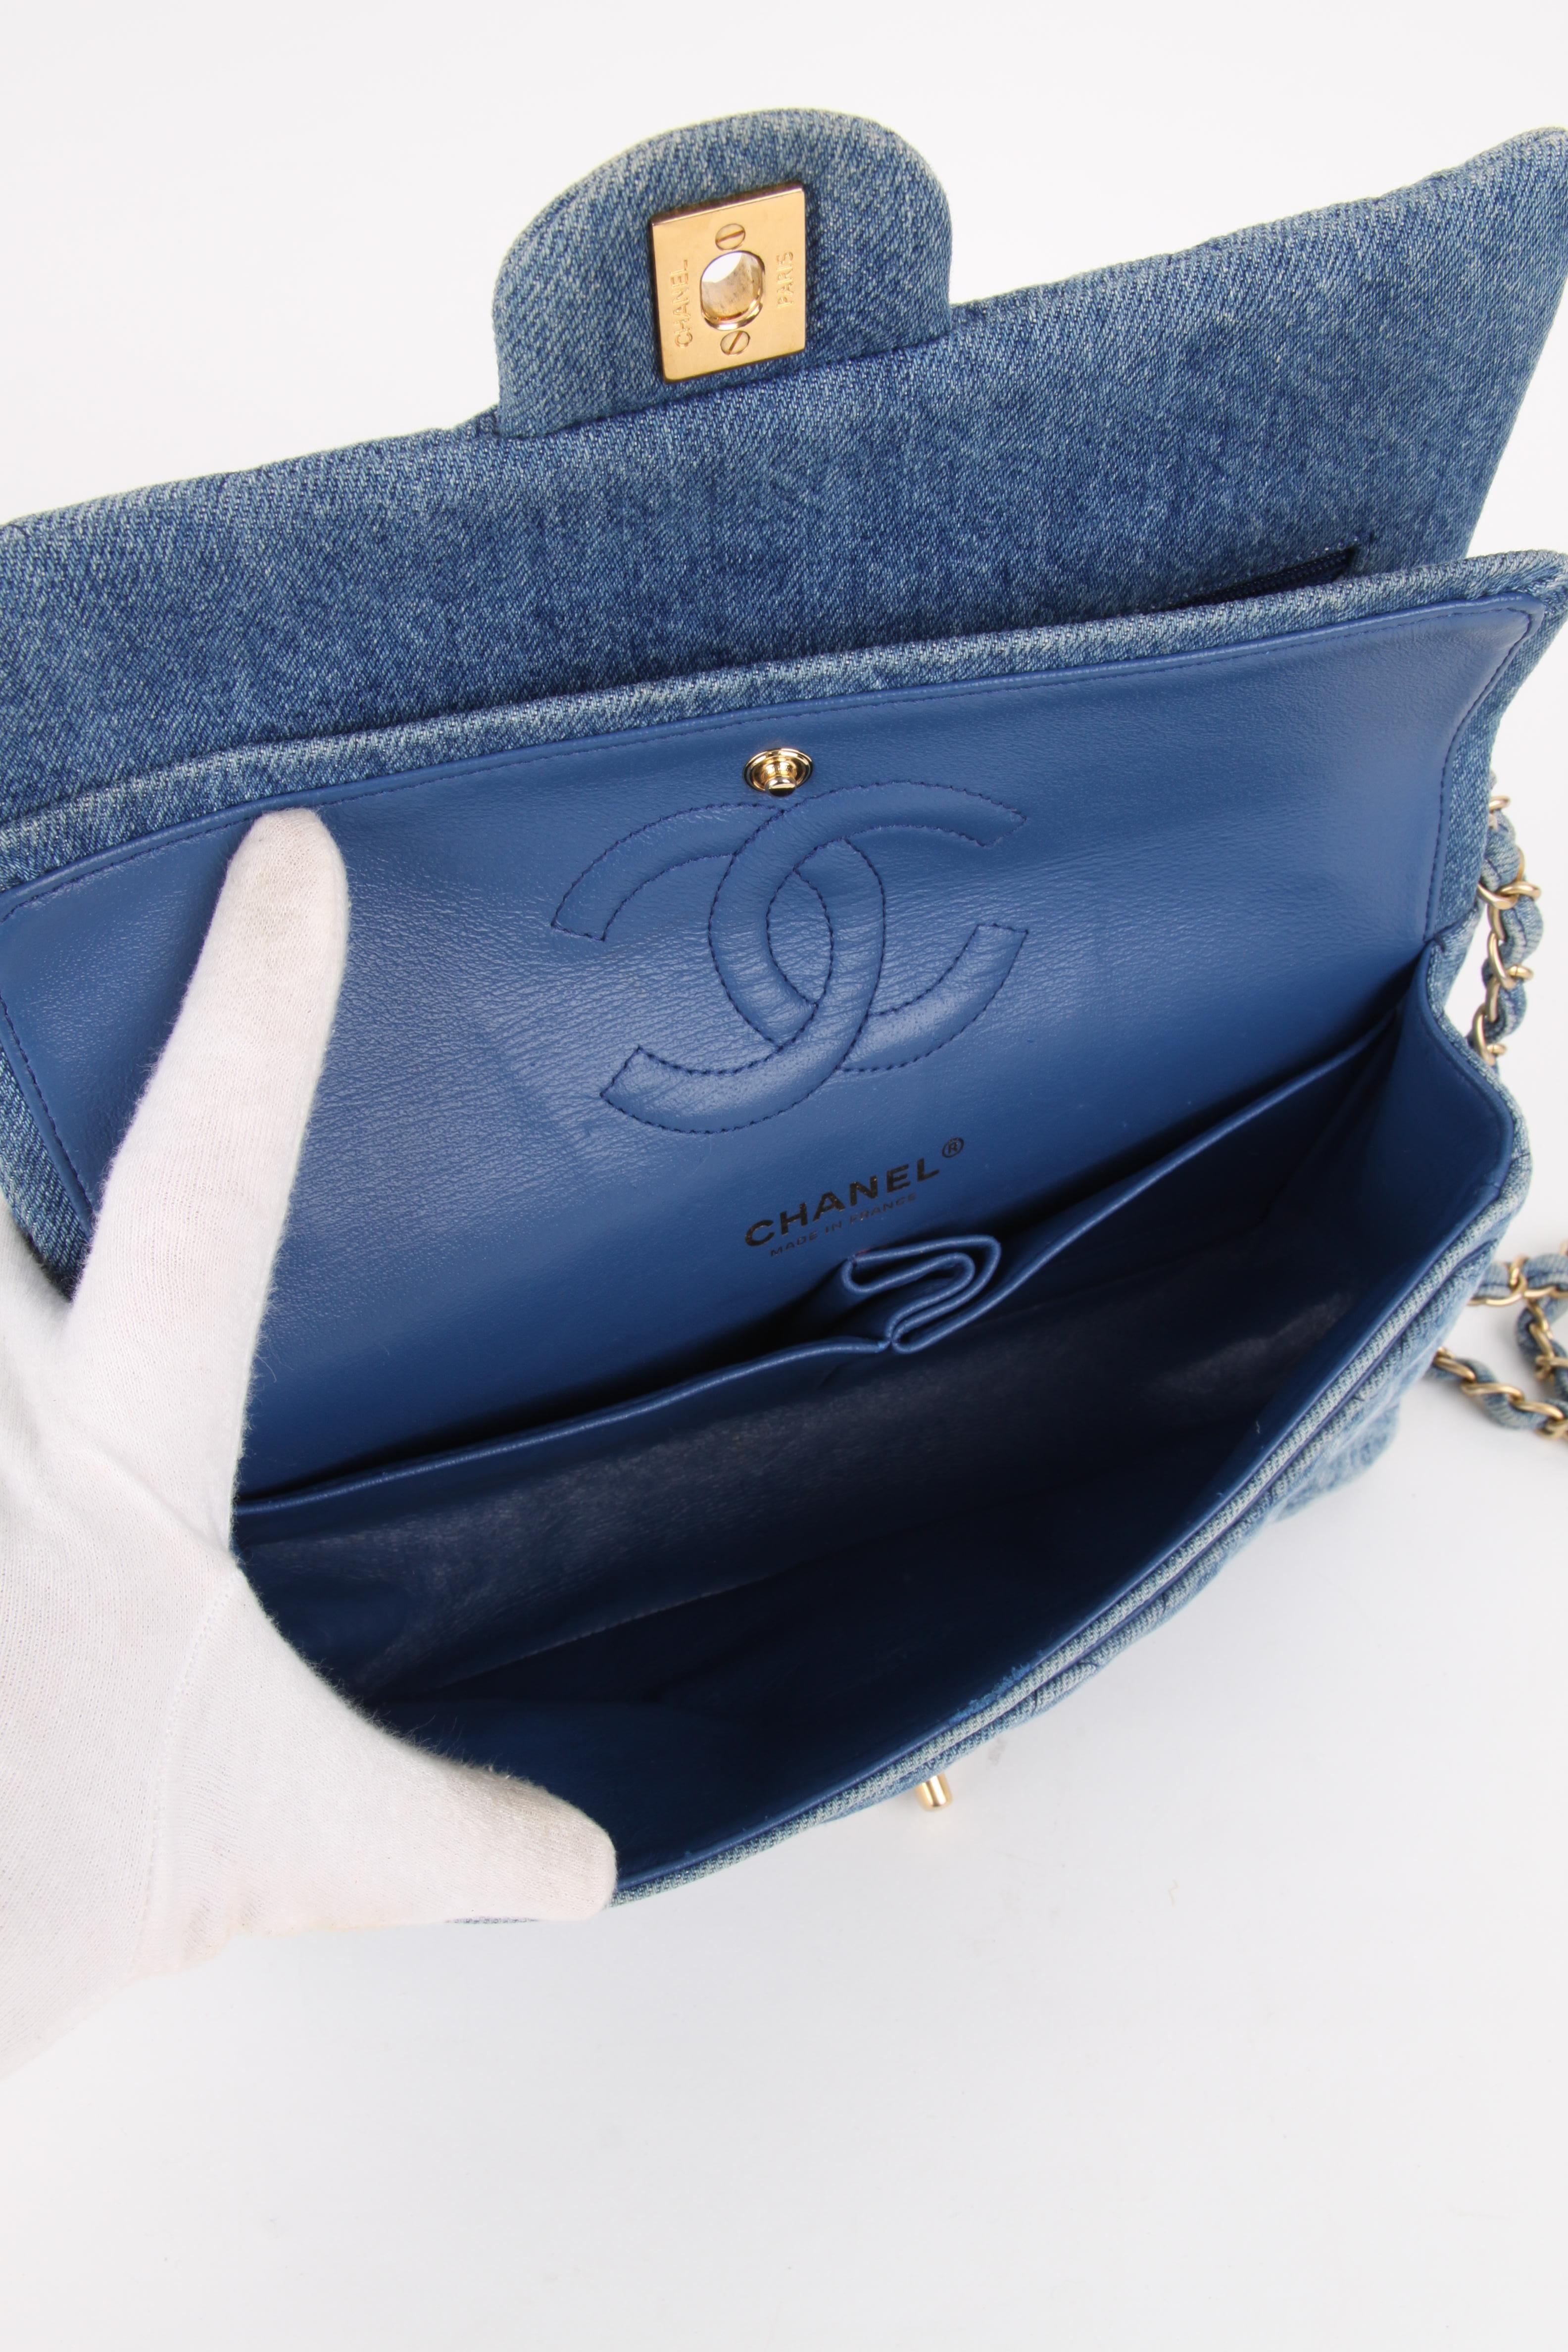 Chanel Classic Medium Denim Double Flap Bag  3